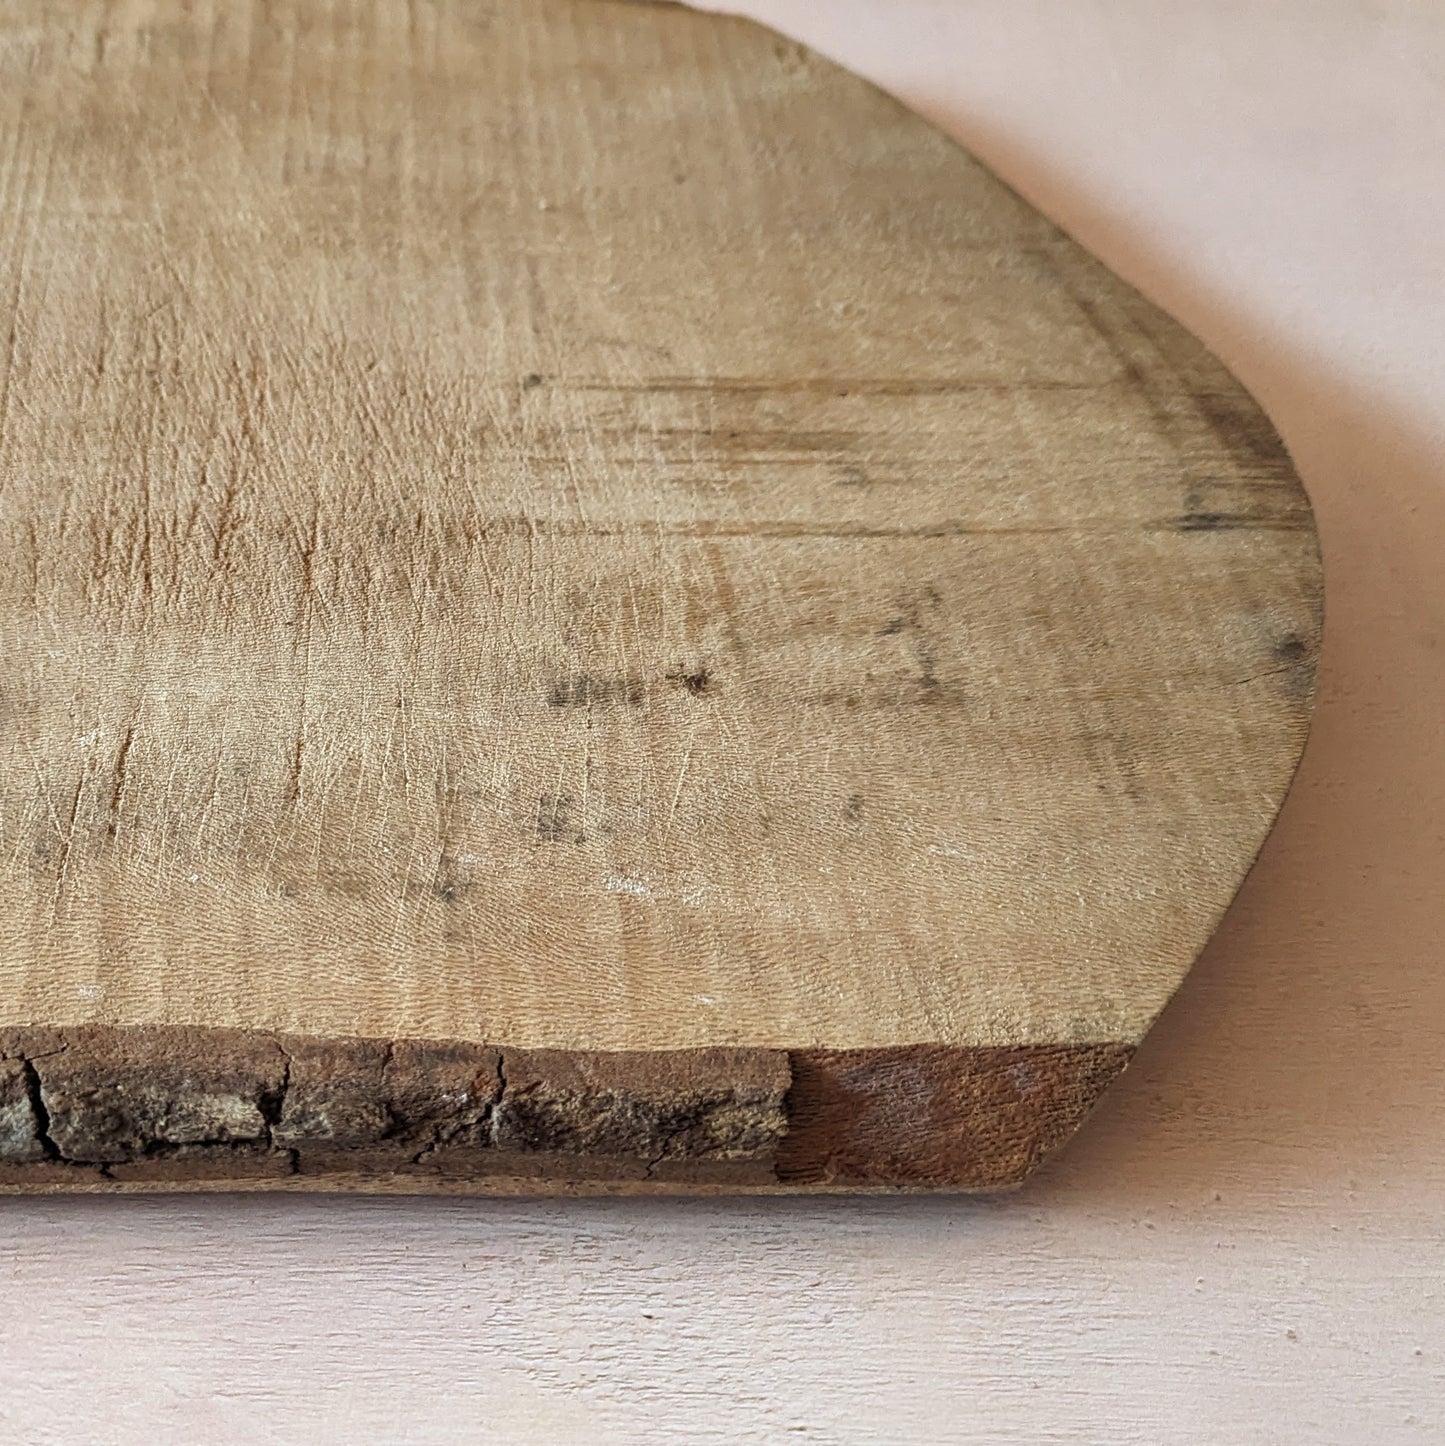 Oblong Rustic Raw Wood Antique Board